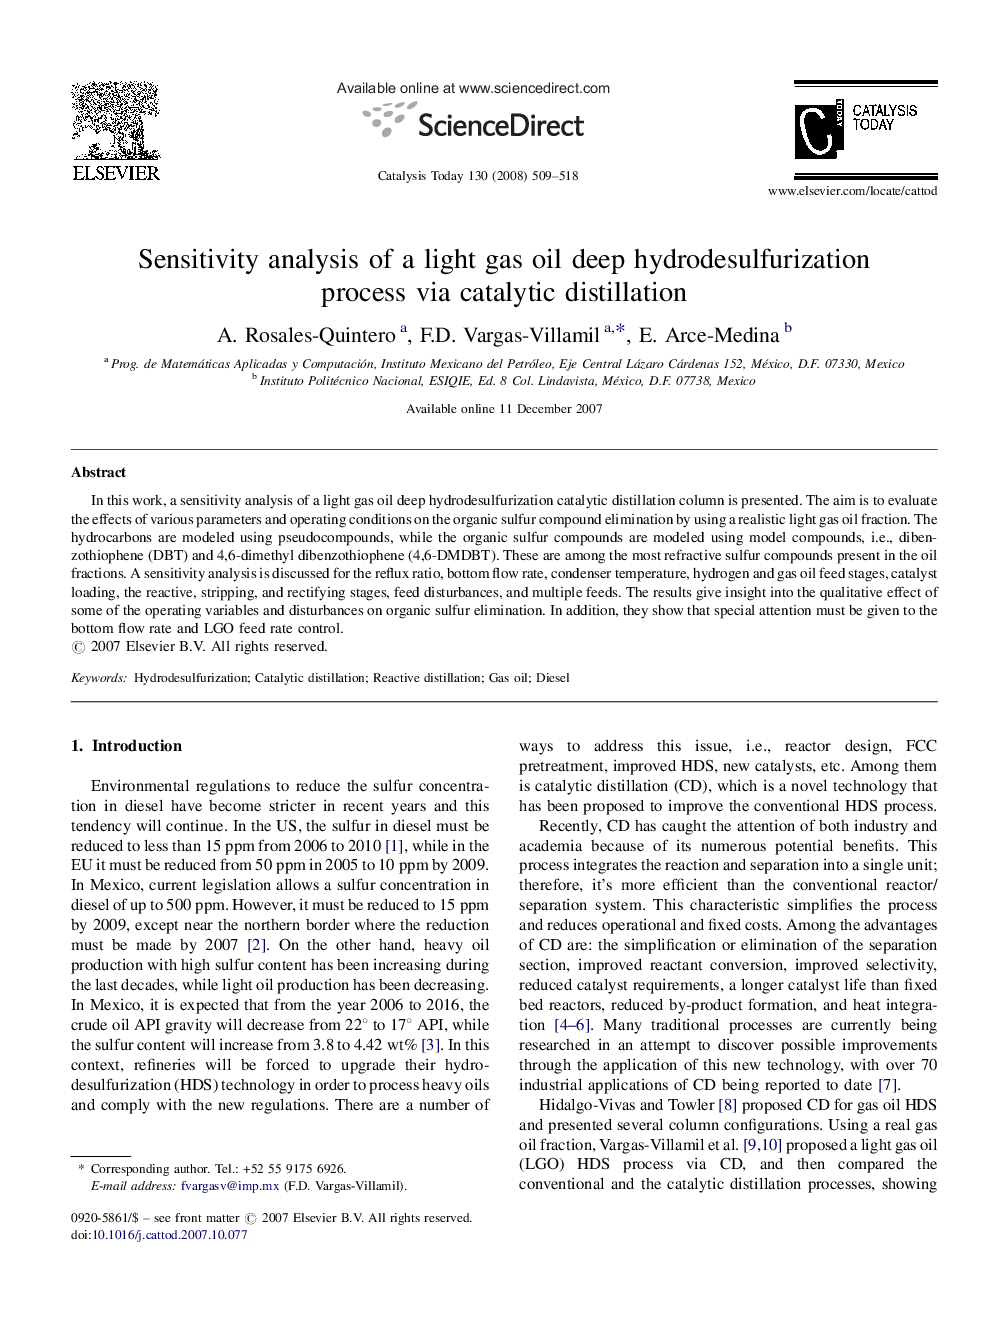 Sensitivity analysis of a light gas oil deep hydrodesulfurization process via catalytic distillation